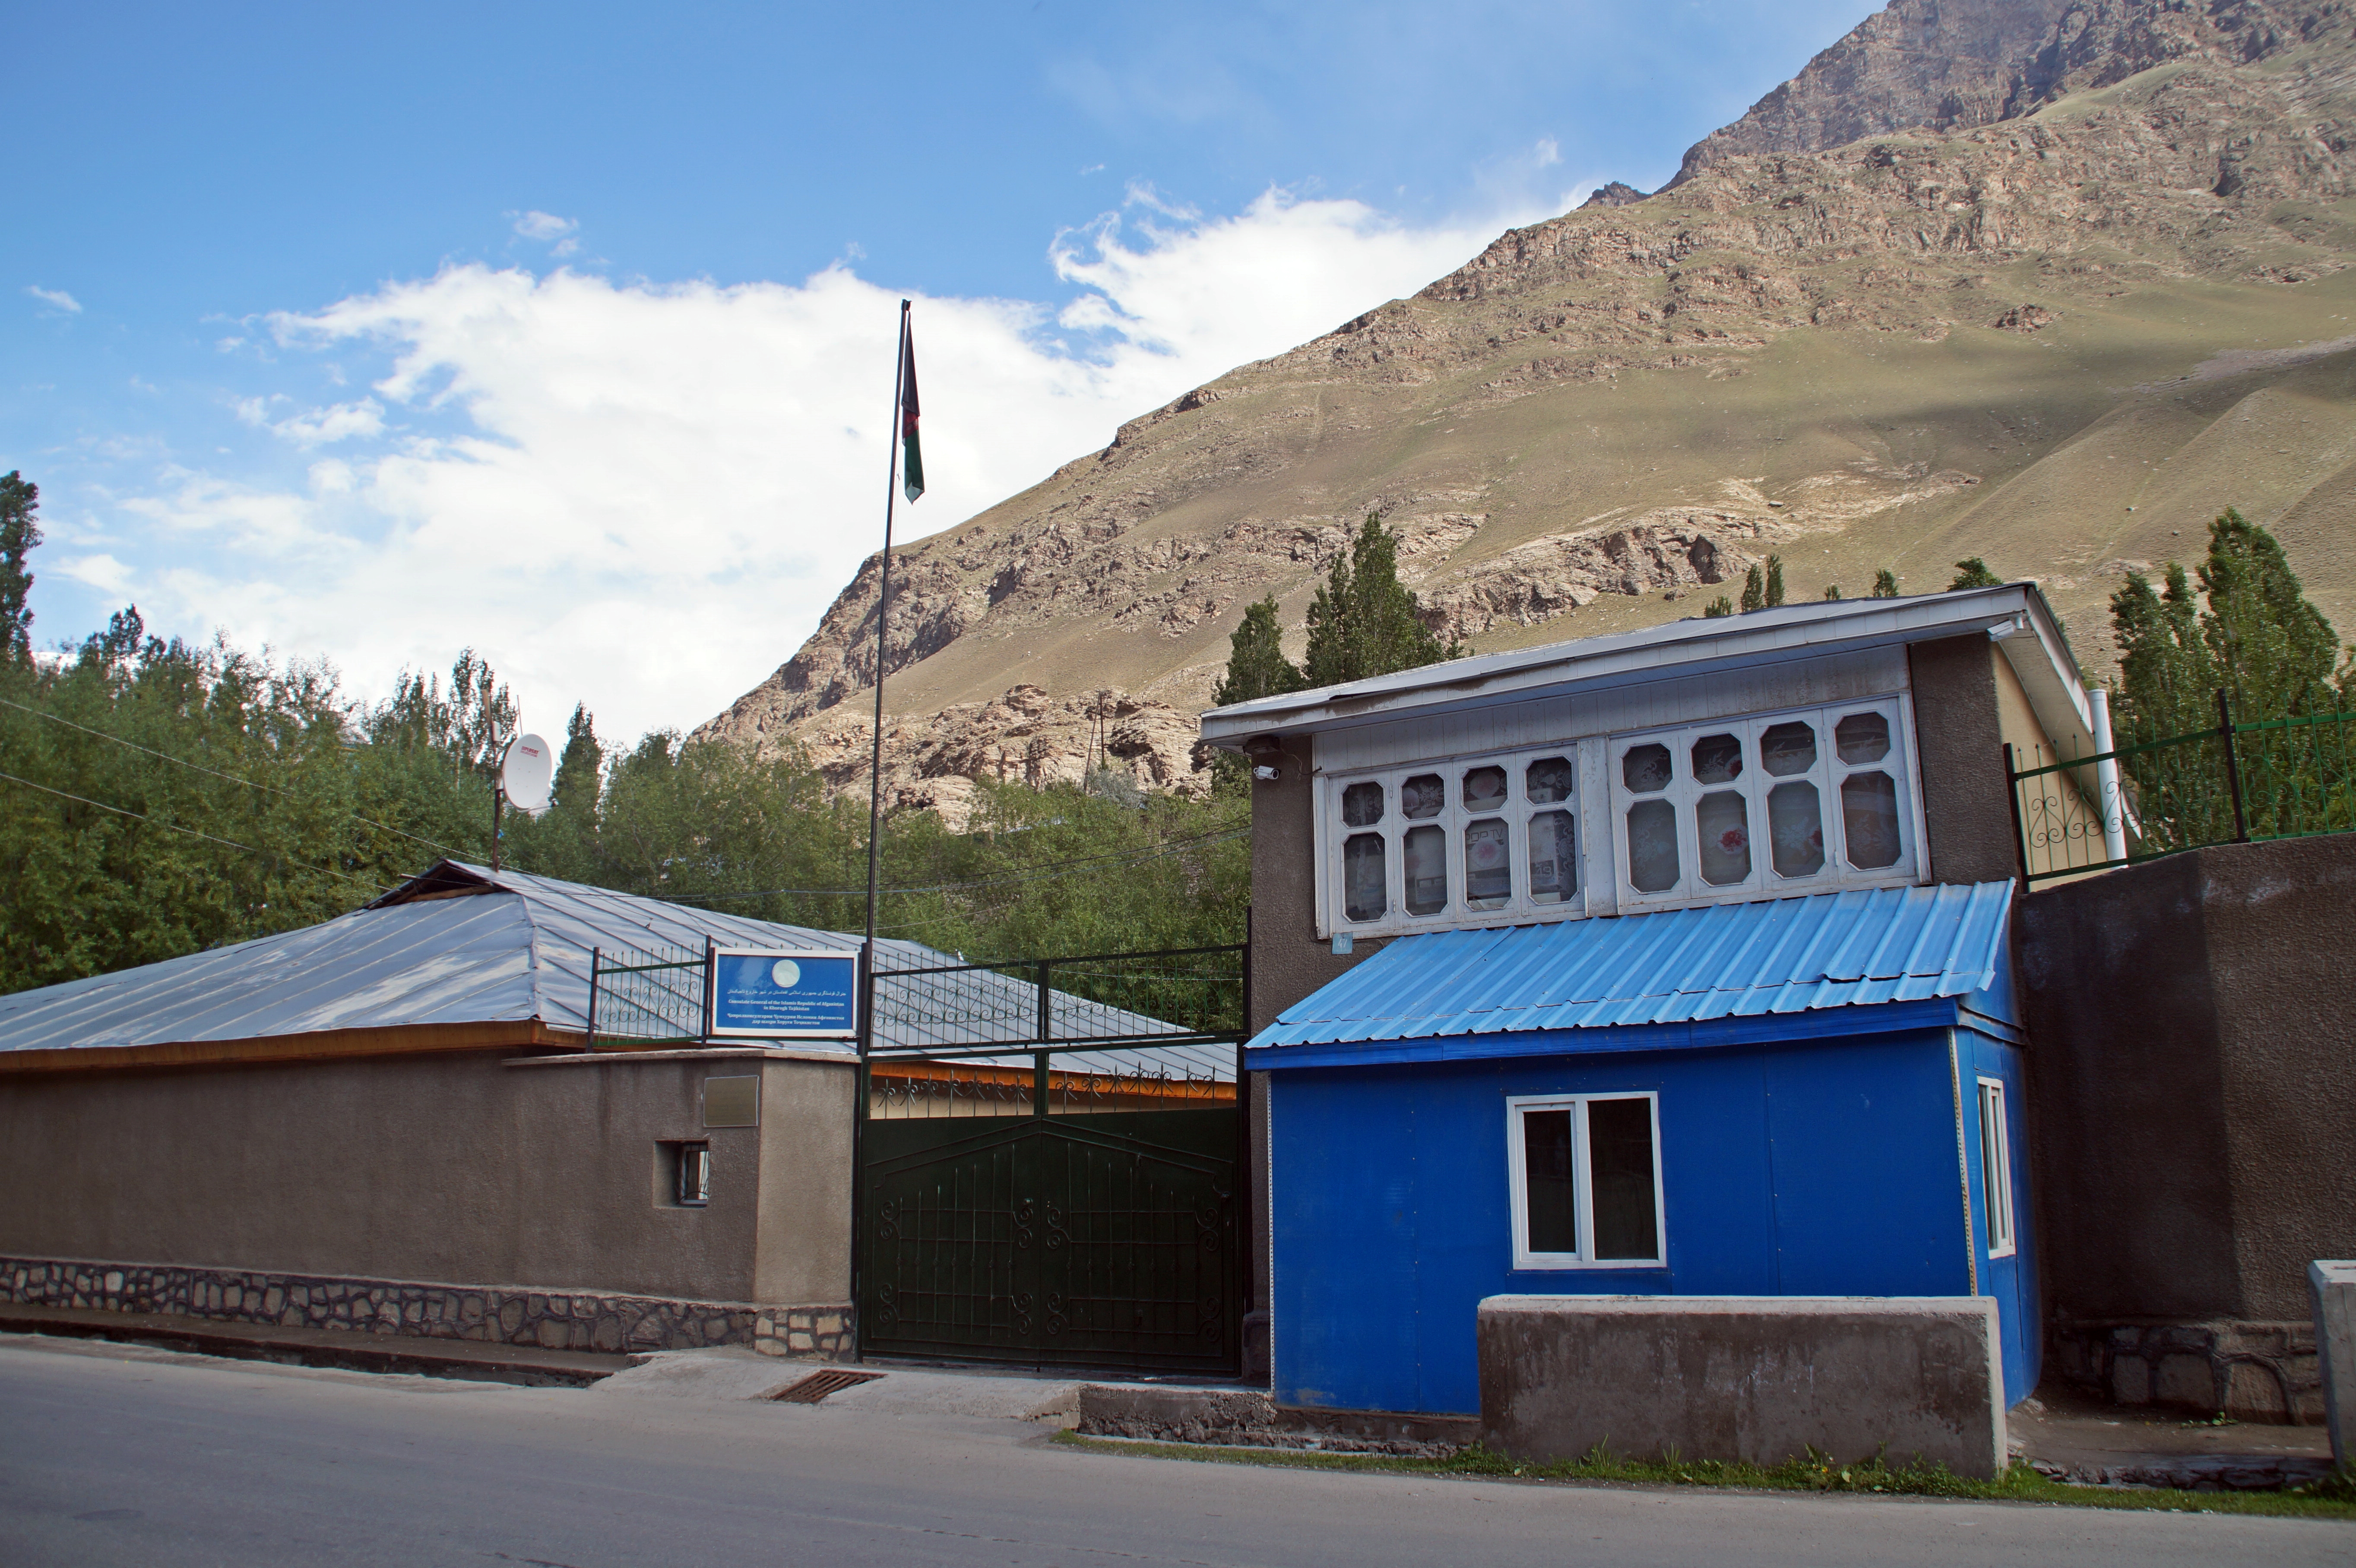 The Afghan consulate in Khorog